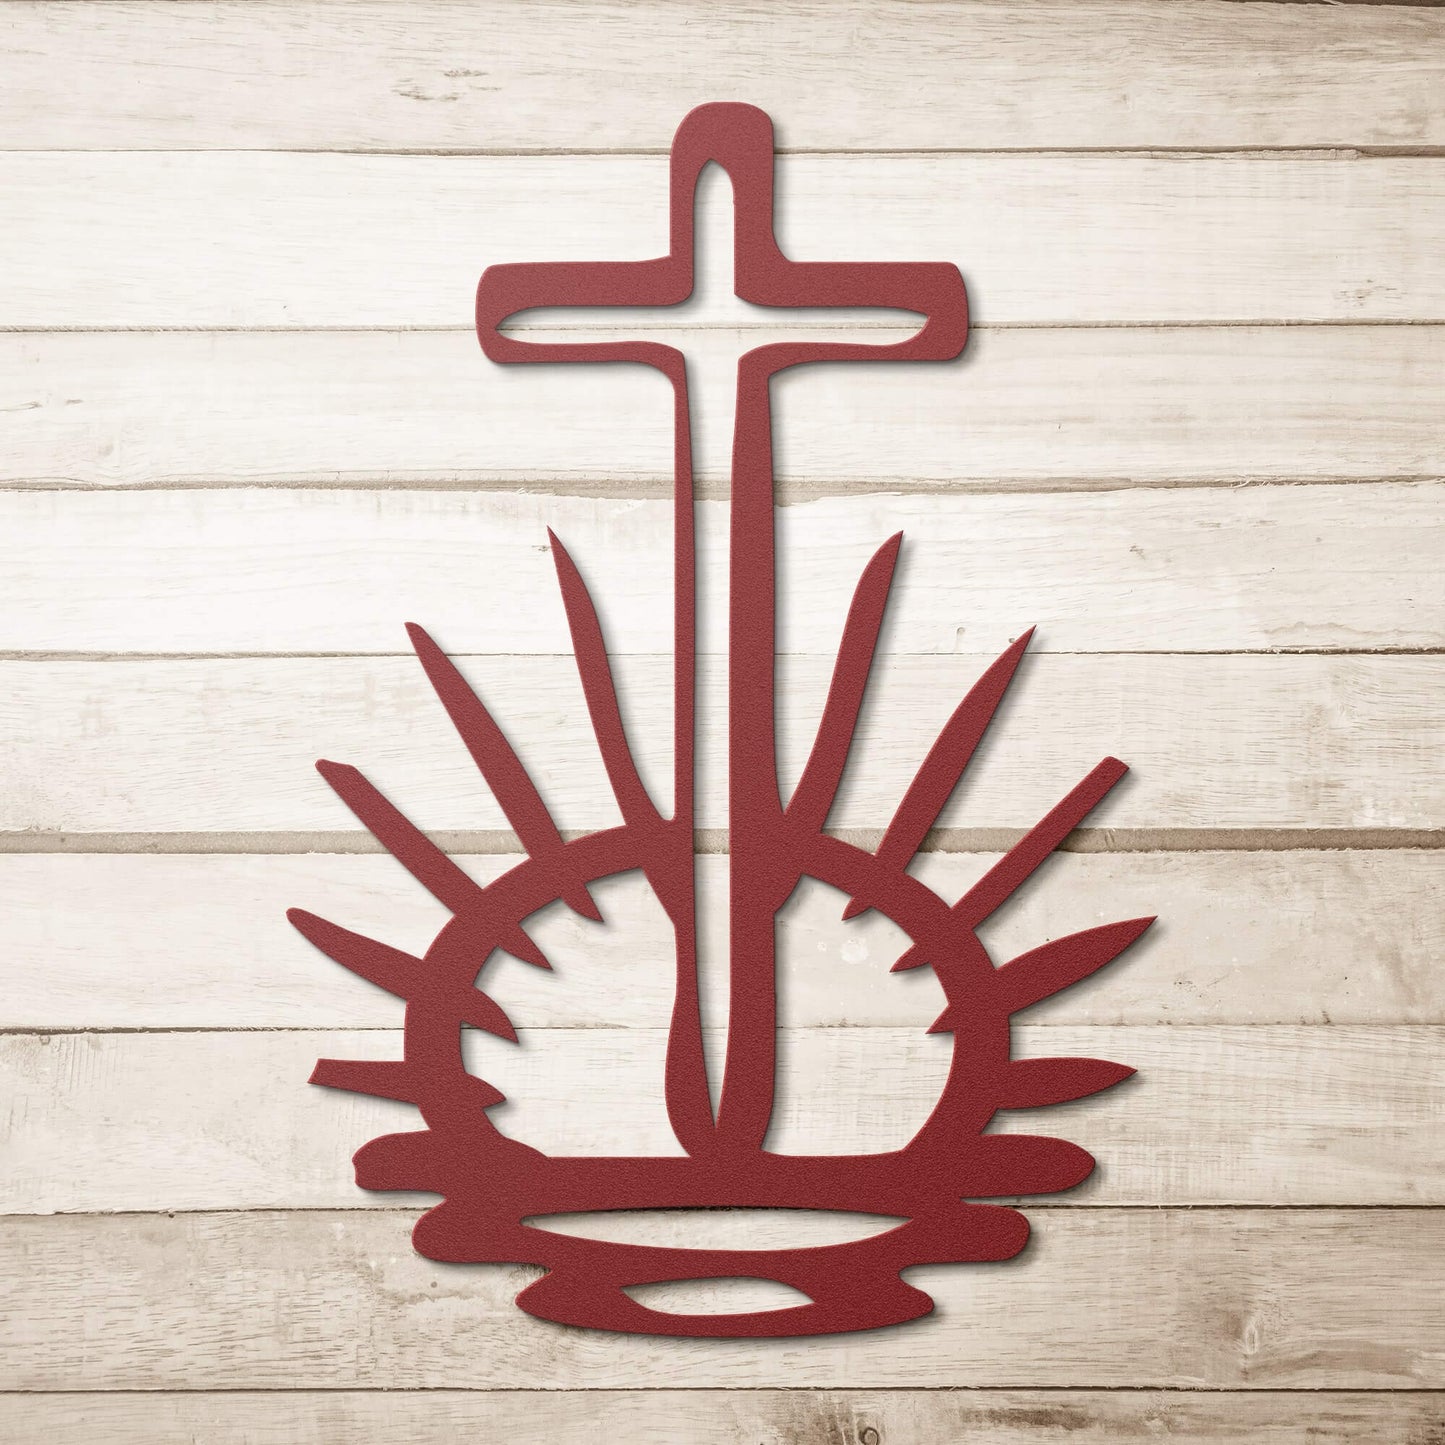 Risen Cross Metal Sign - Christian Metal Wall Art - Religious Metal Wall Decor